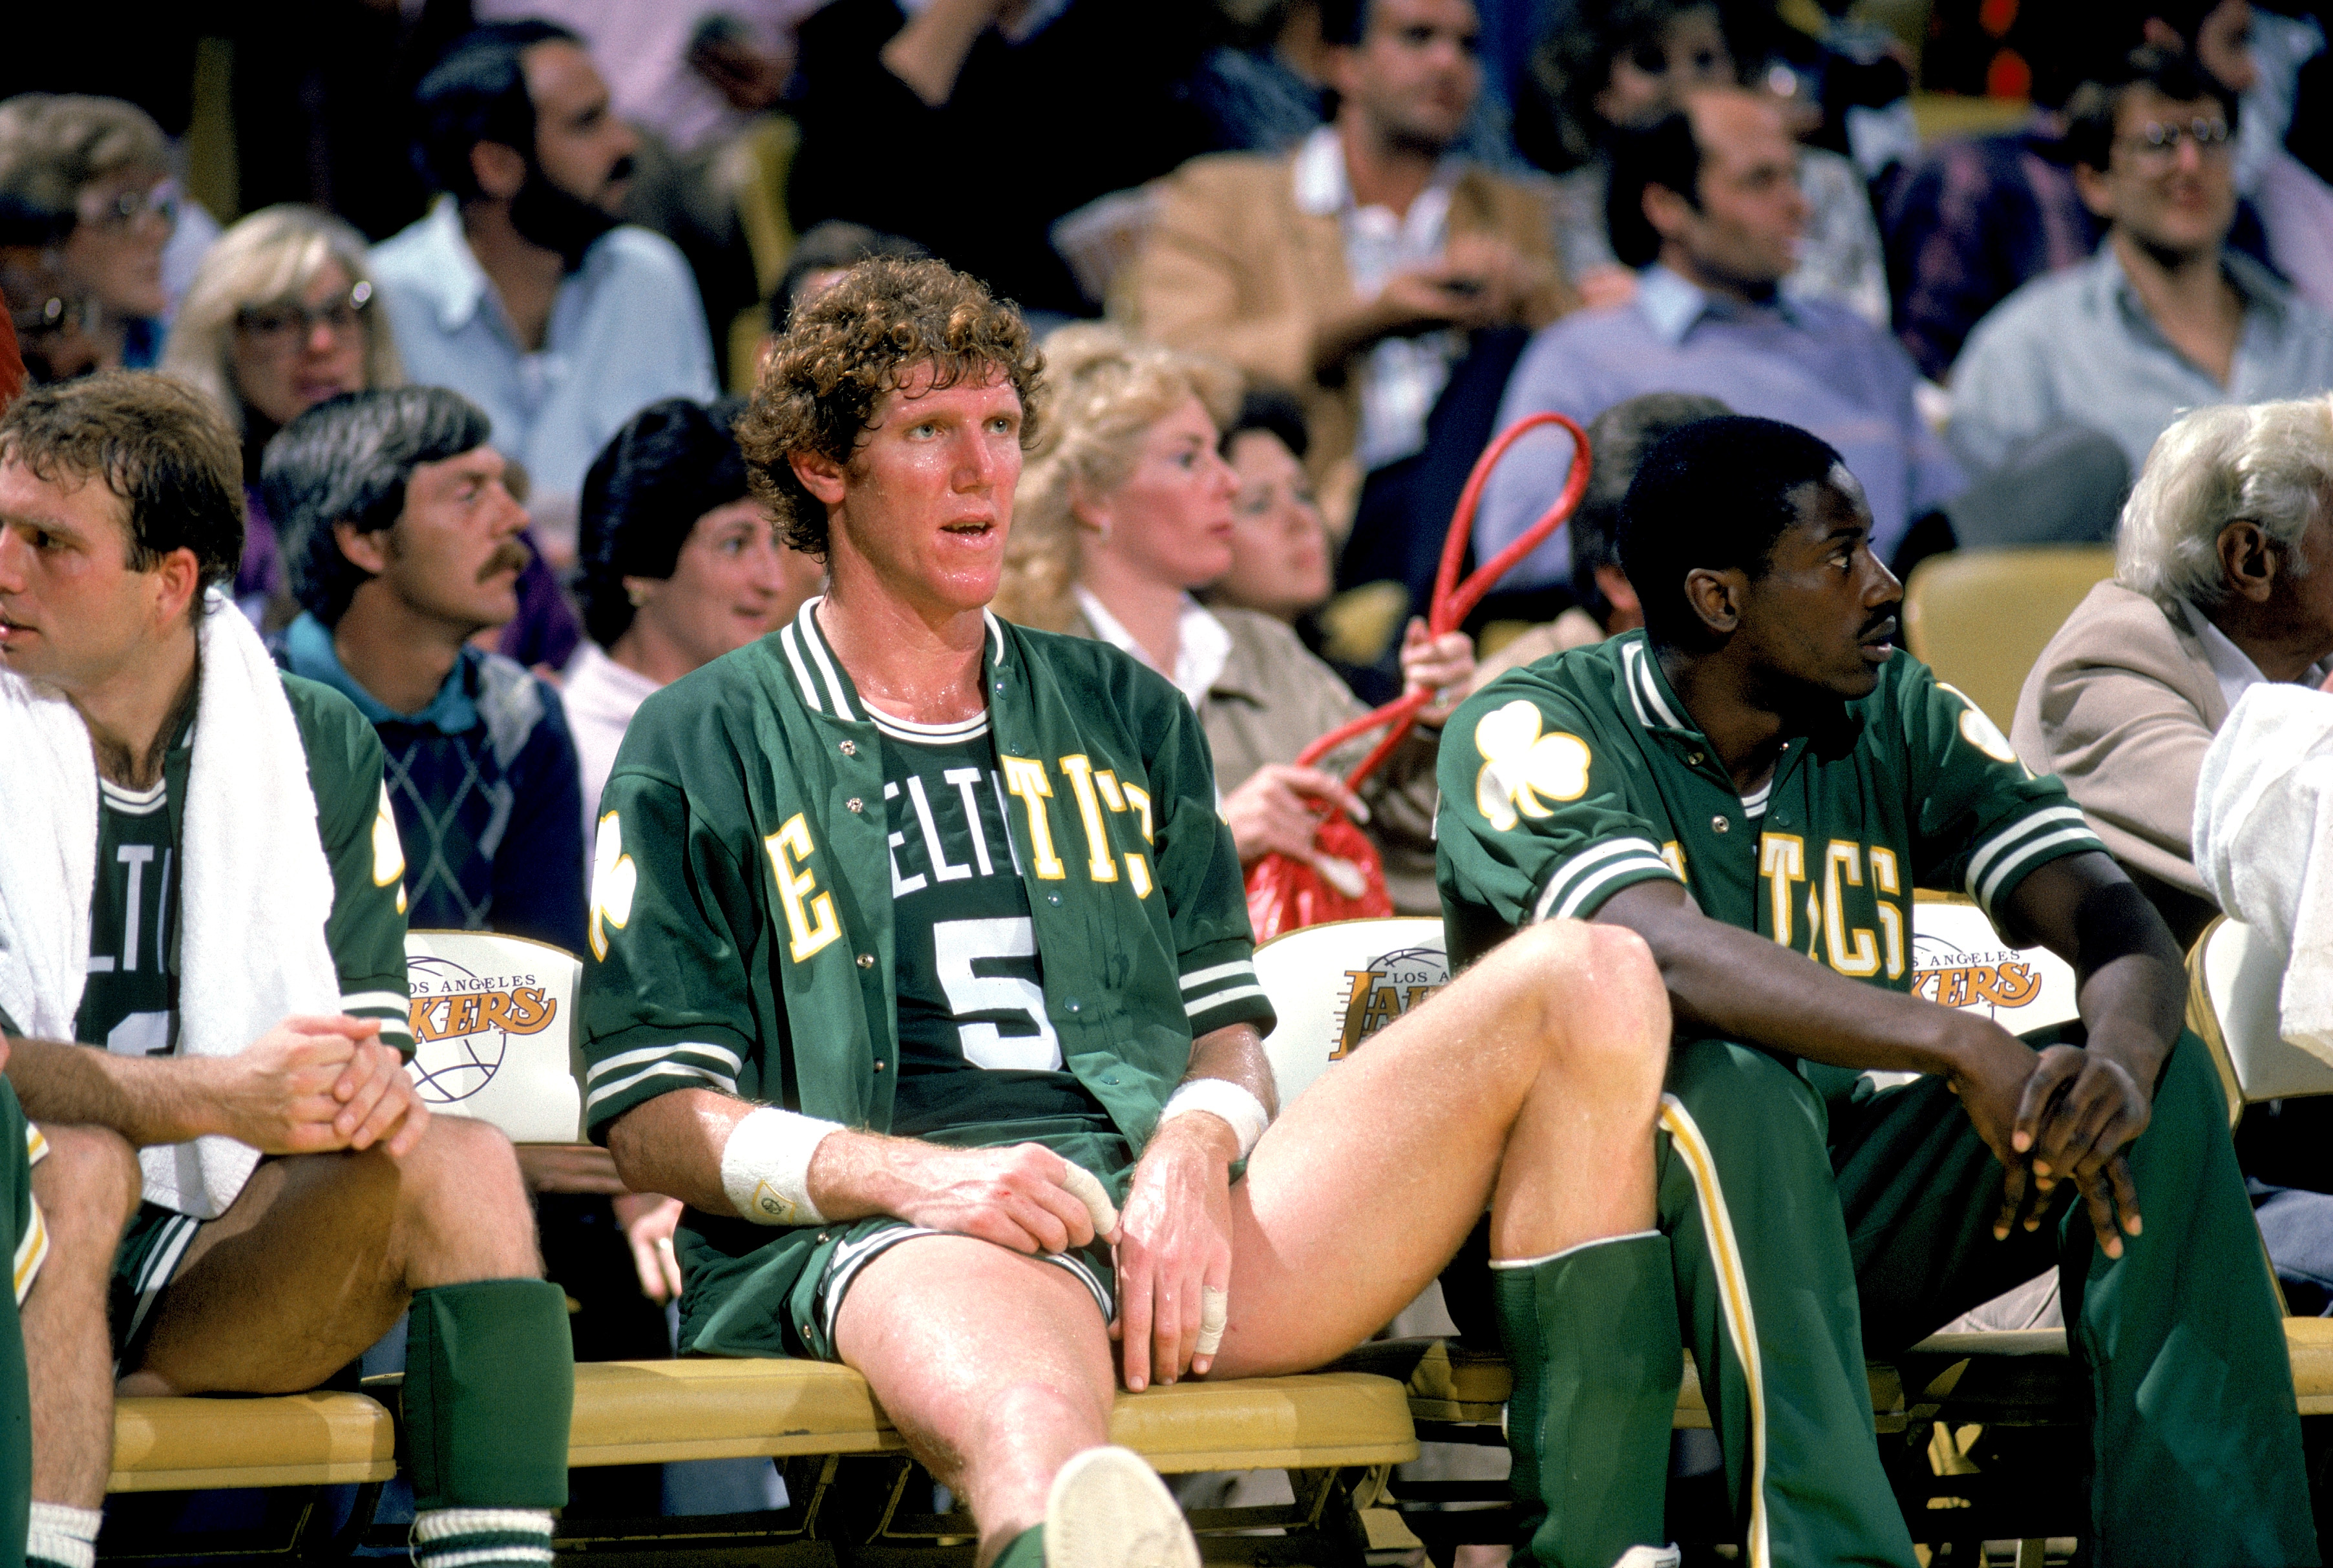 TD Garden - Jim Loscotuff, a Celtics legend and seven-time NBA